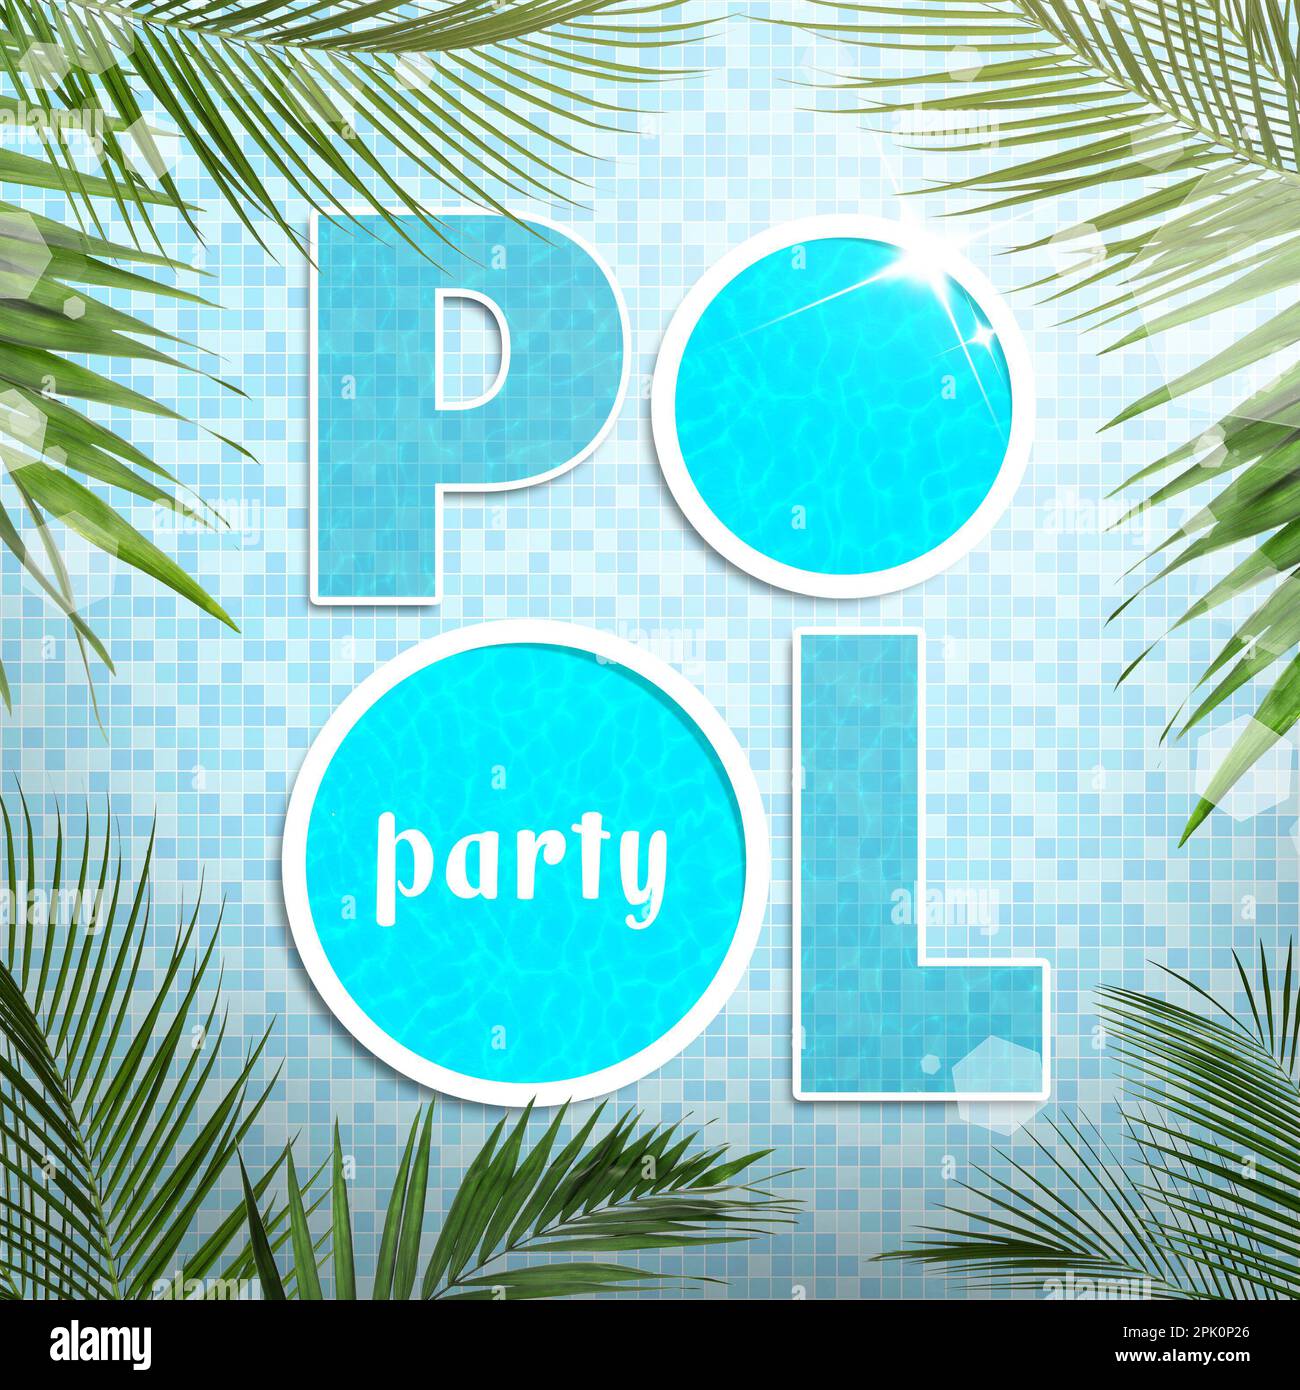 https://c8.alamy.com/comp/2PK0P26/bright-summer-swimming-pool-party-advertising-poster-2PK0P26.jpg